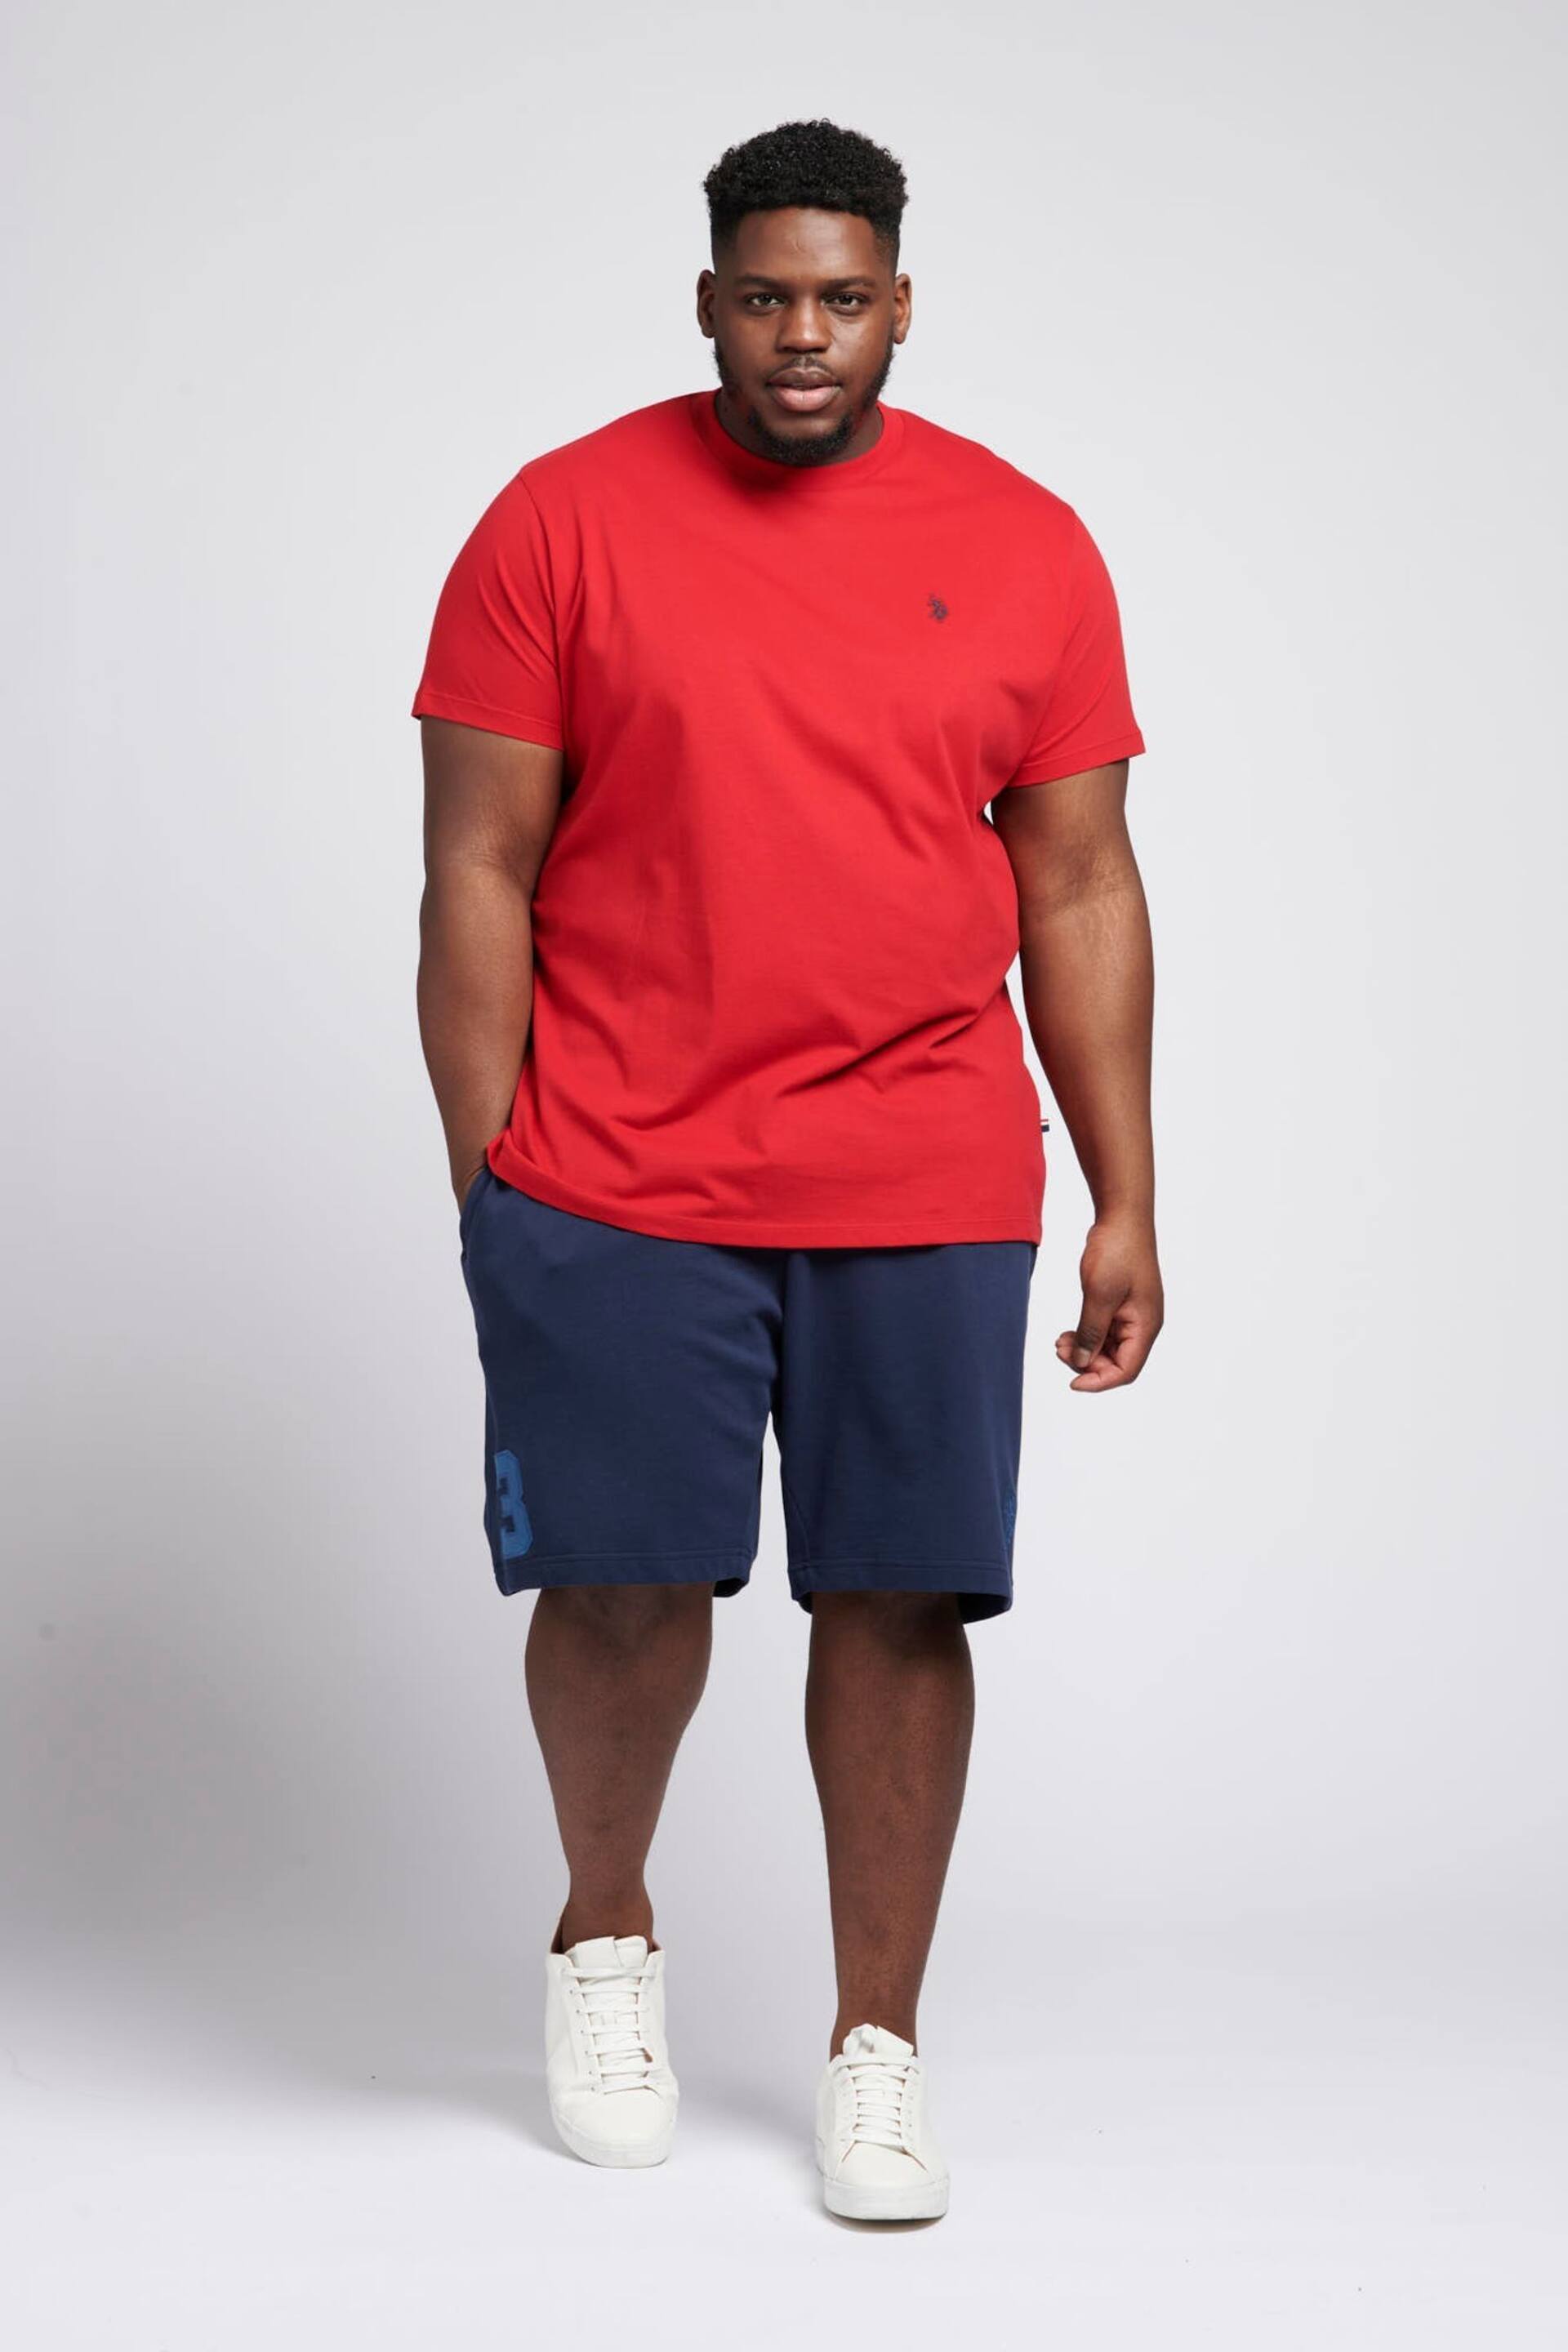 U.S. Polo Assn. Mens Big & Tall Core Logo T-Shirt - Image 3 of 4